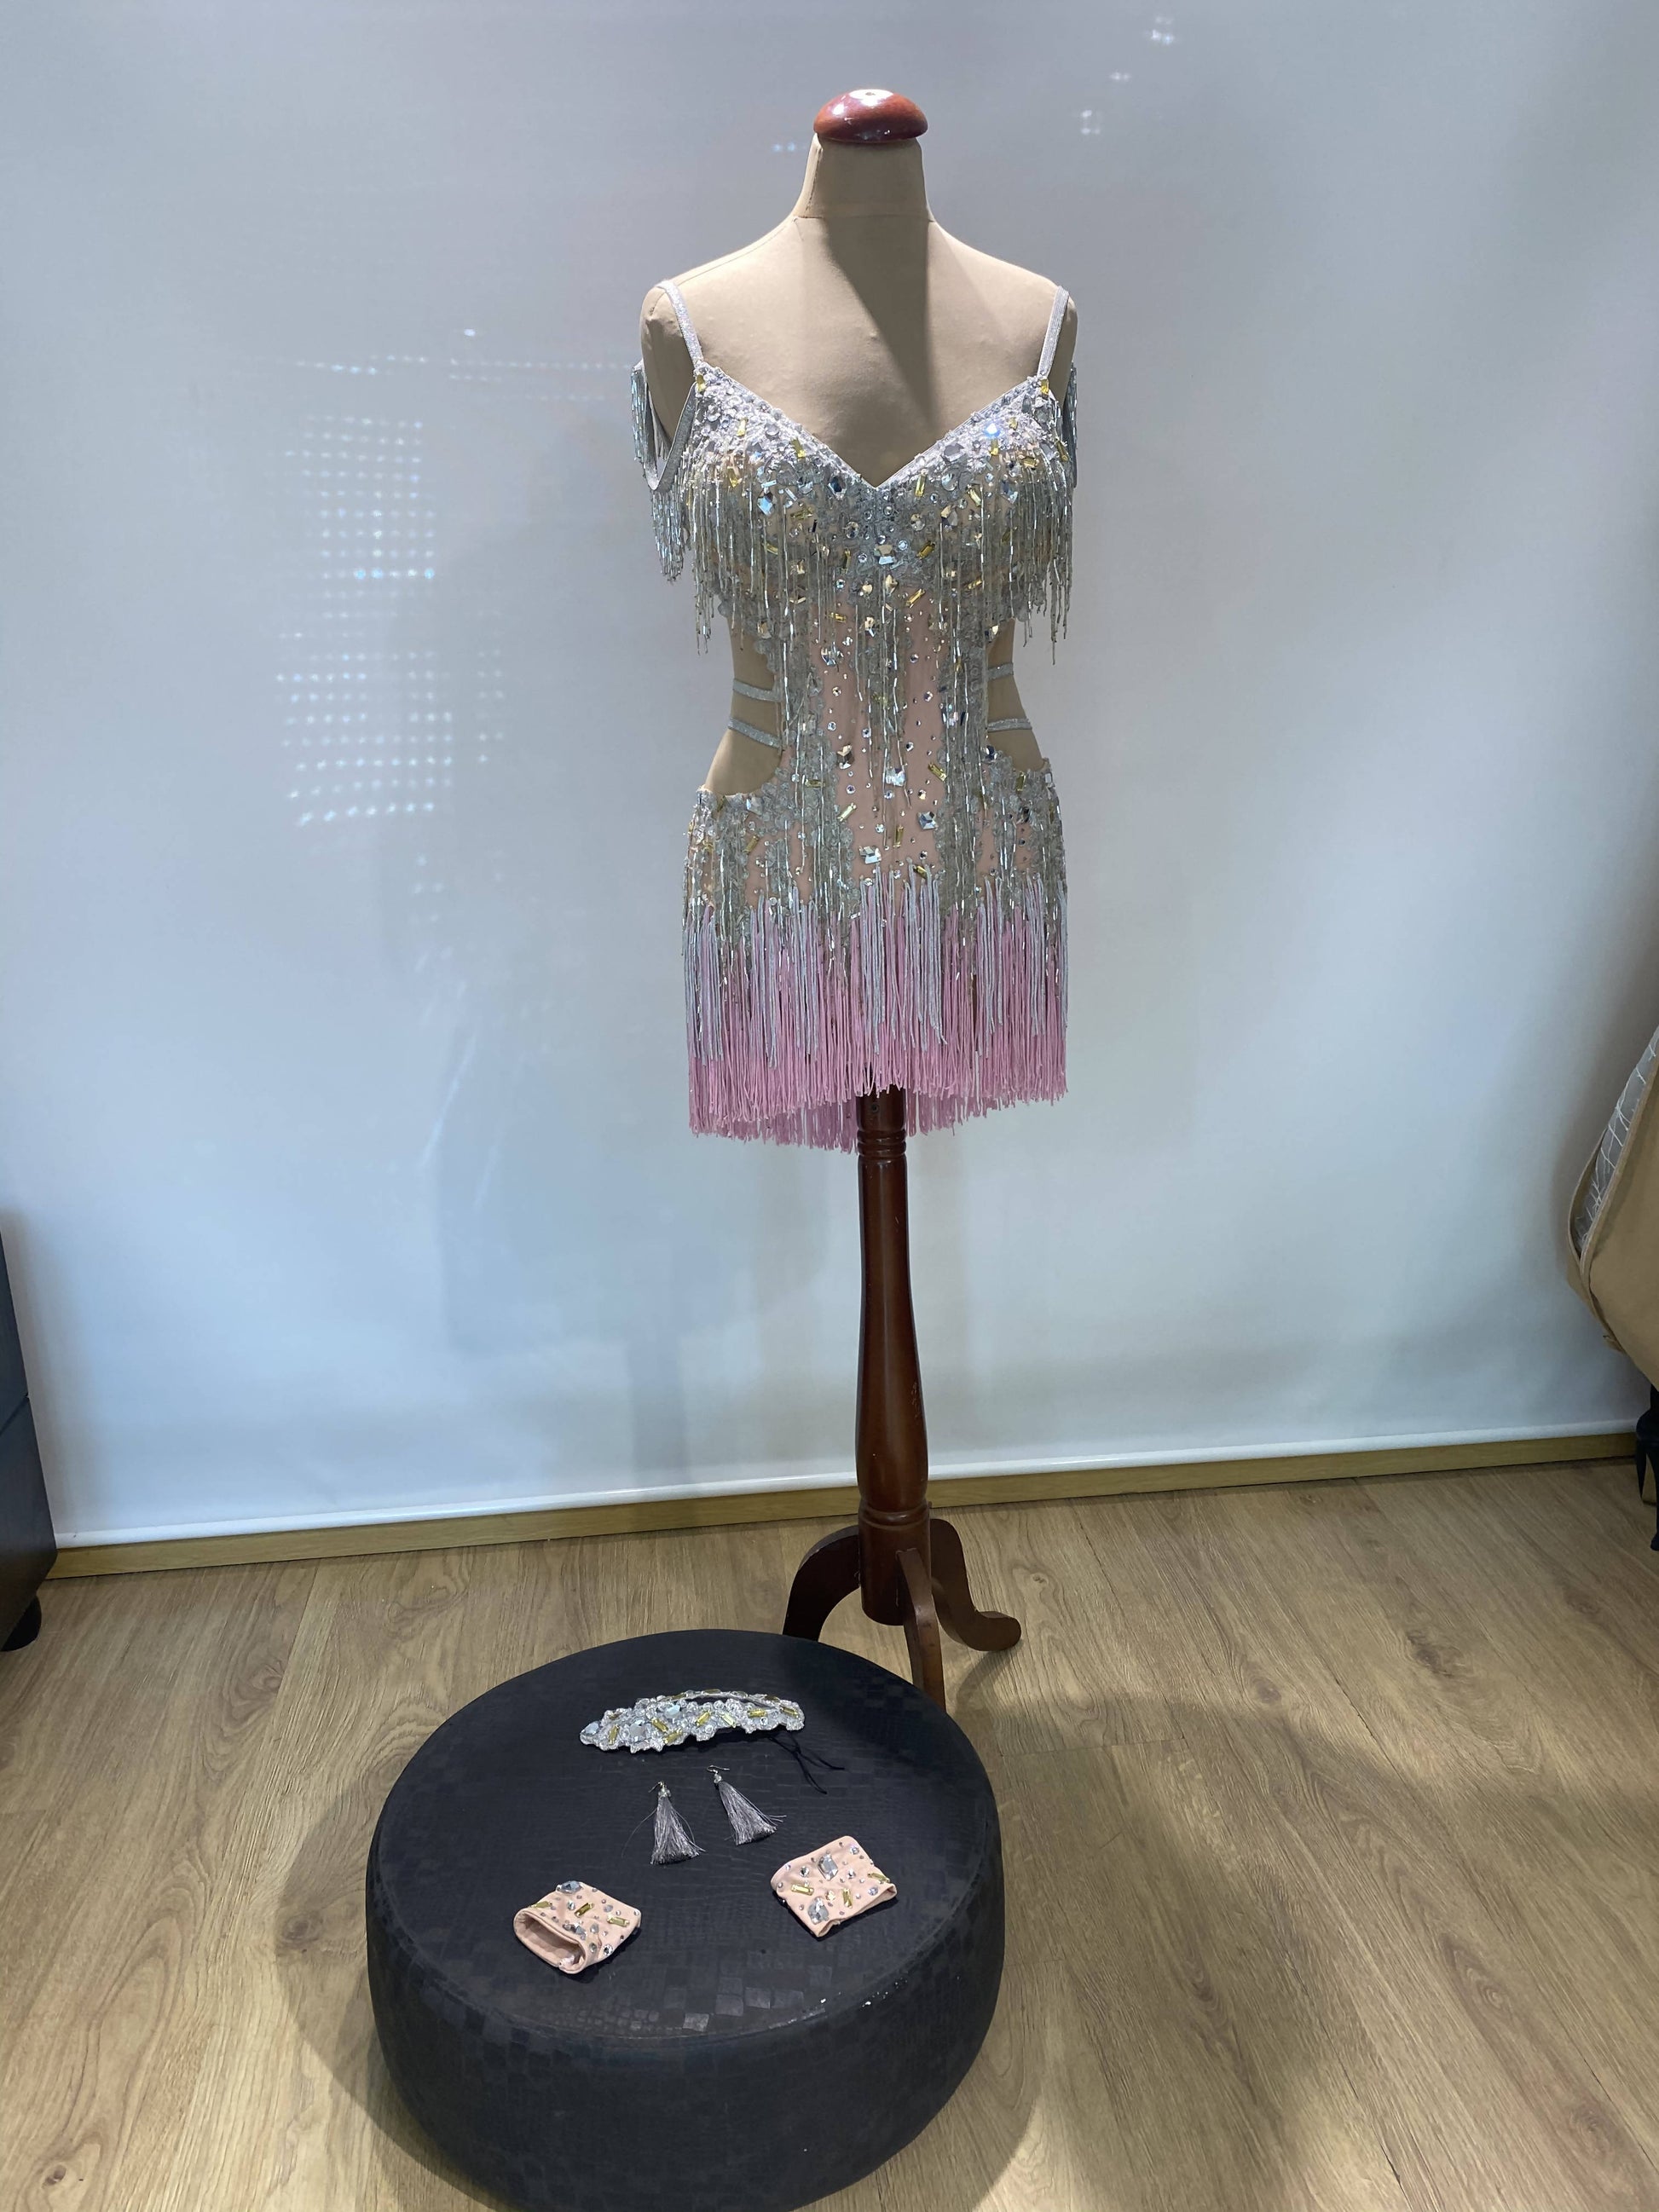 DANCESPORT.RU - pink Latin dress with fringe skirt